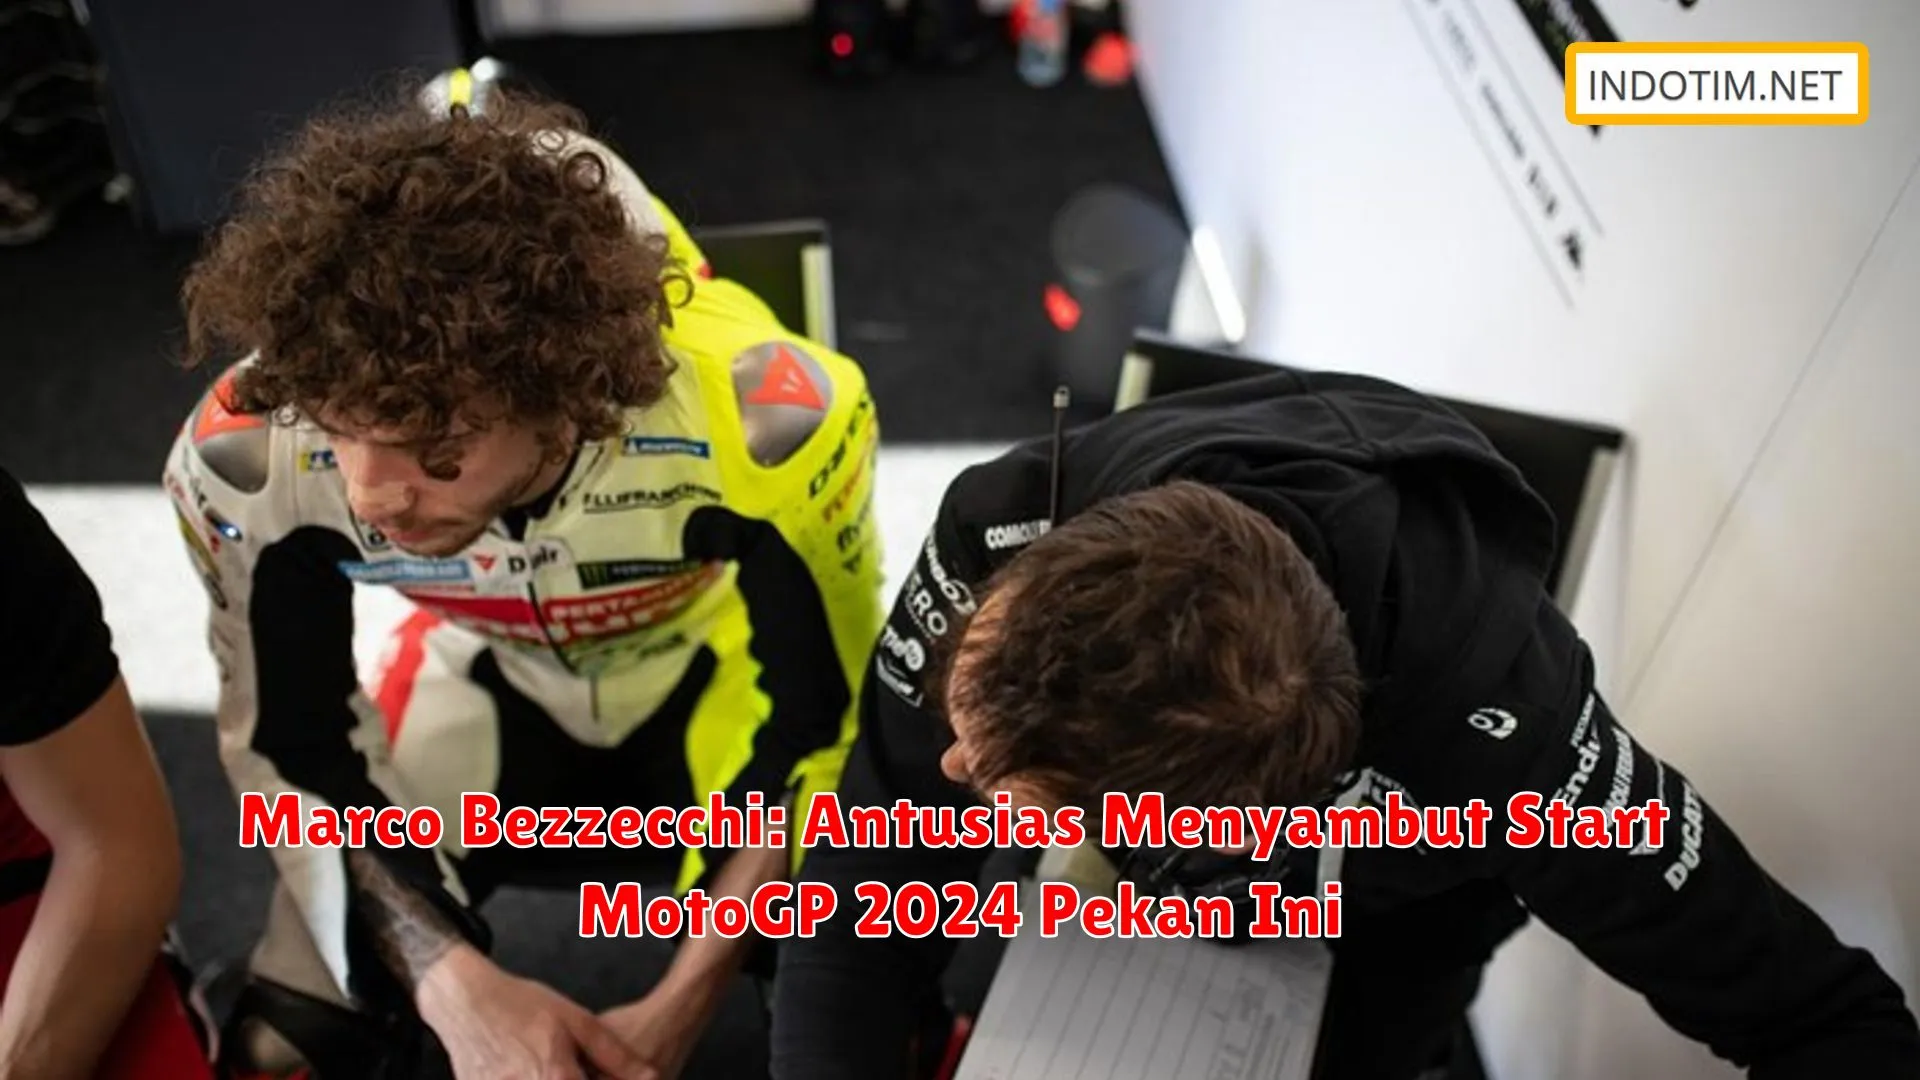 Marco Bezzecchi: Antusias Menyambut Start MotoGP 2024 Pekan Ini